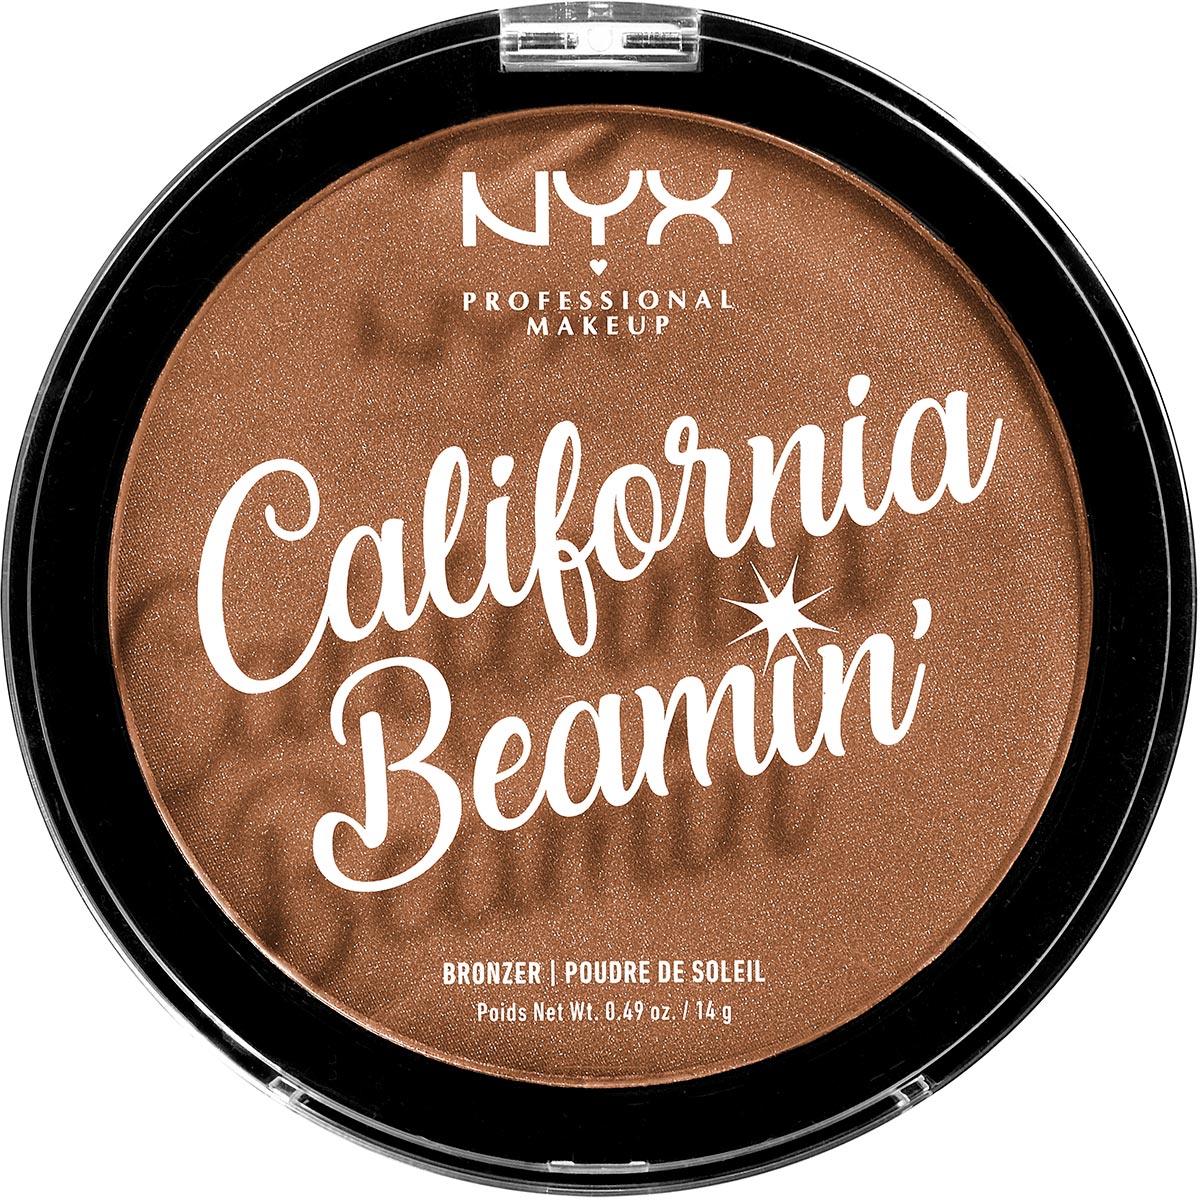 California Beamin' Face & Body Bronzer,  NYX Professional Makeup Bronzer